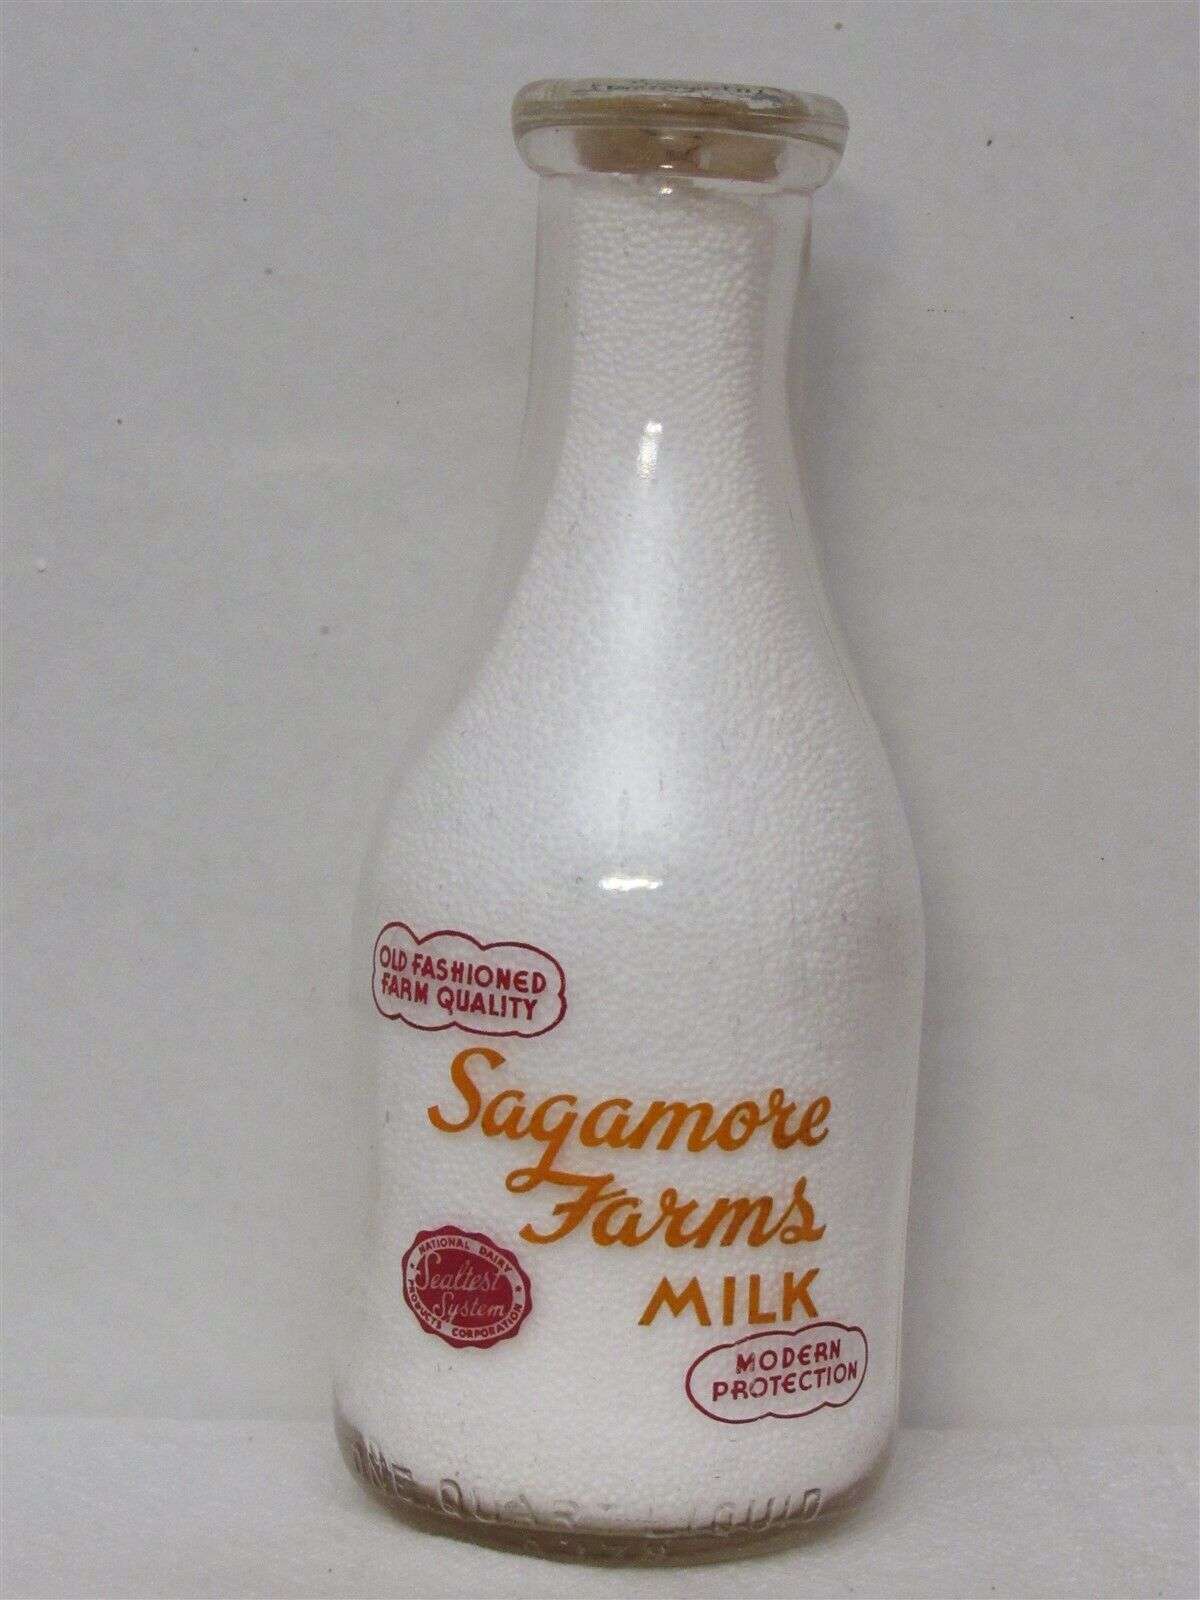 TRPQ Milk Bottle Sagamore Farms Dairy 1942 2-COLOR Sealtest Logo ME Location???